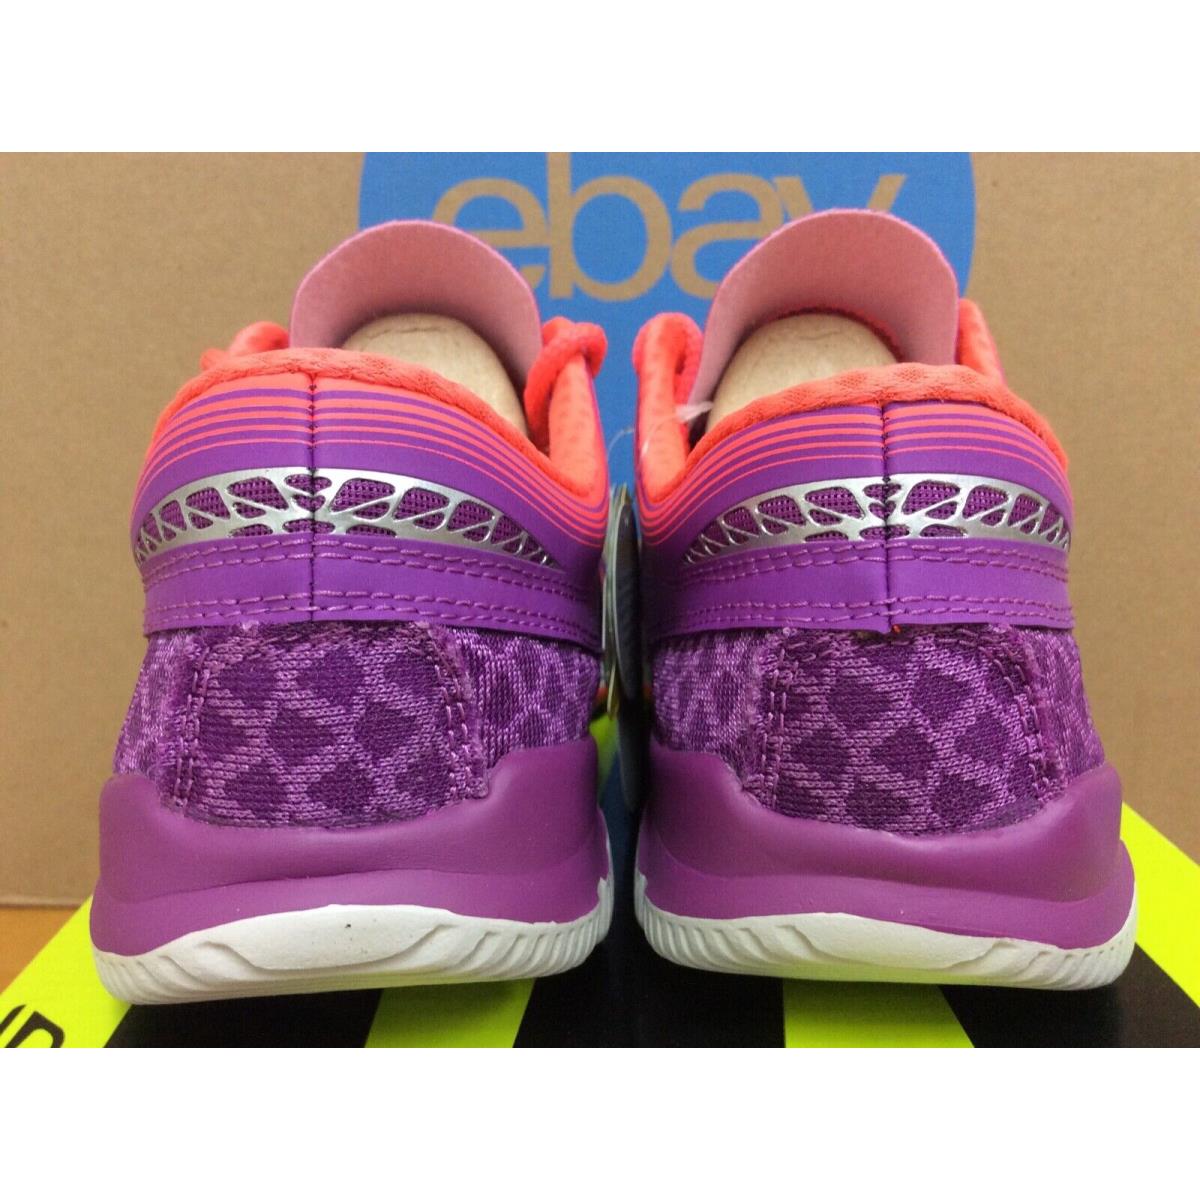 Skechers shoes Bionic Prana - Purple Hot Pink 2